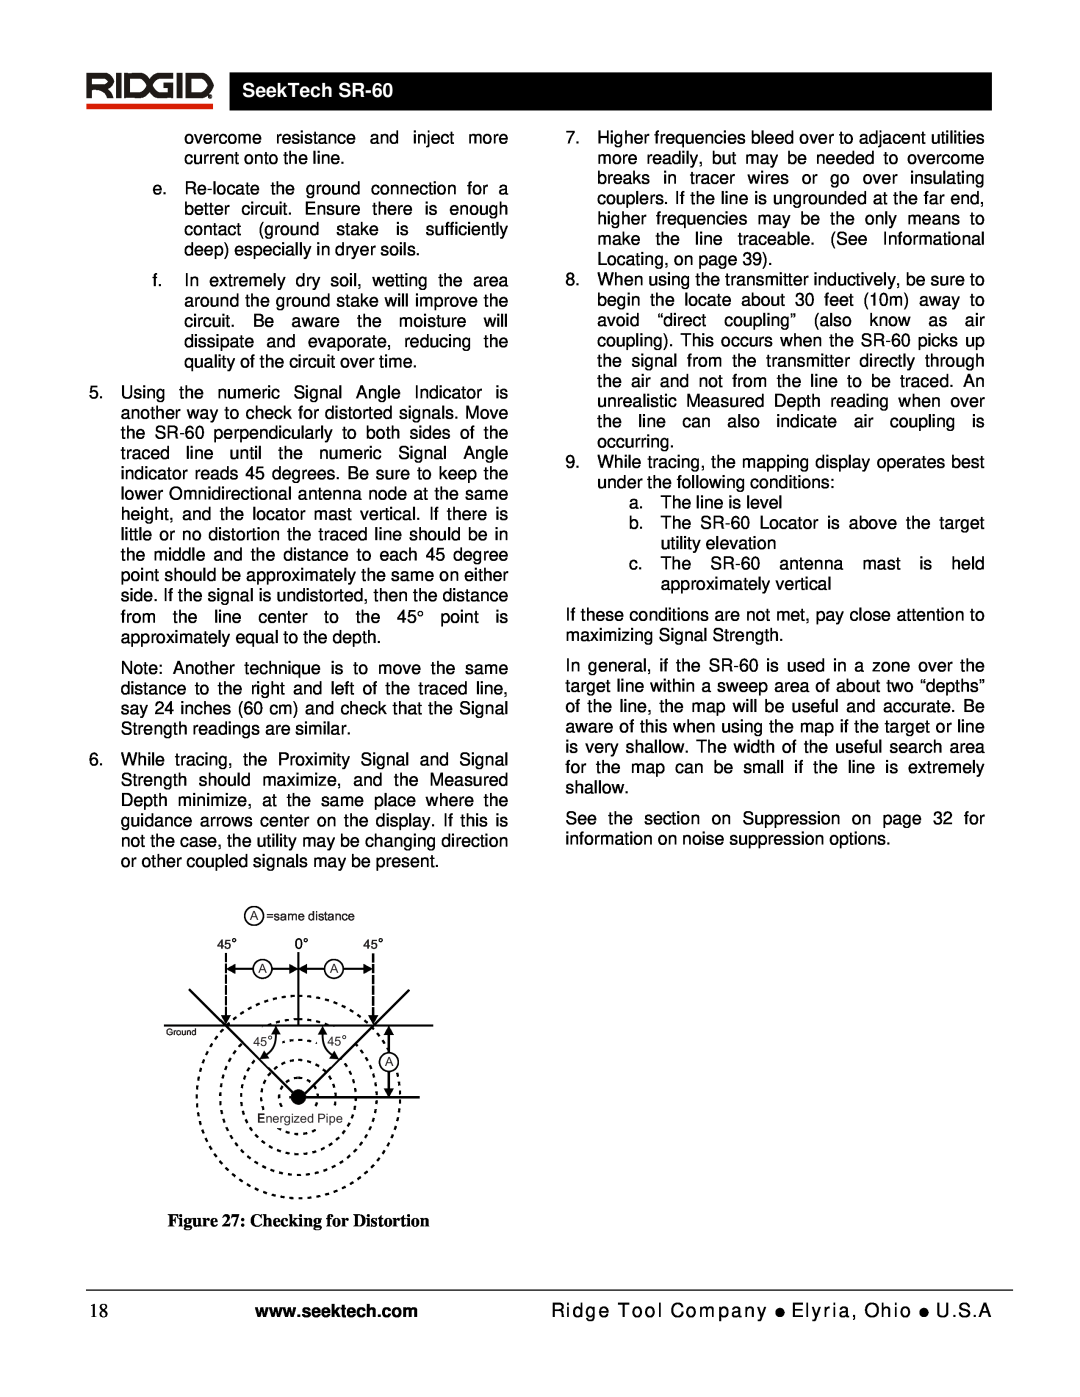 RIDGID manual Checking for Distortion, SeekTech SR-60 